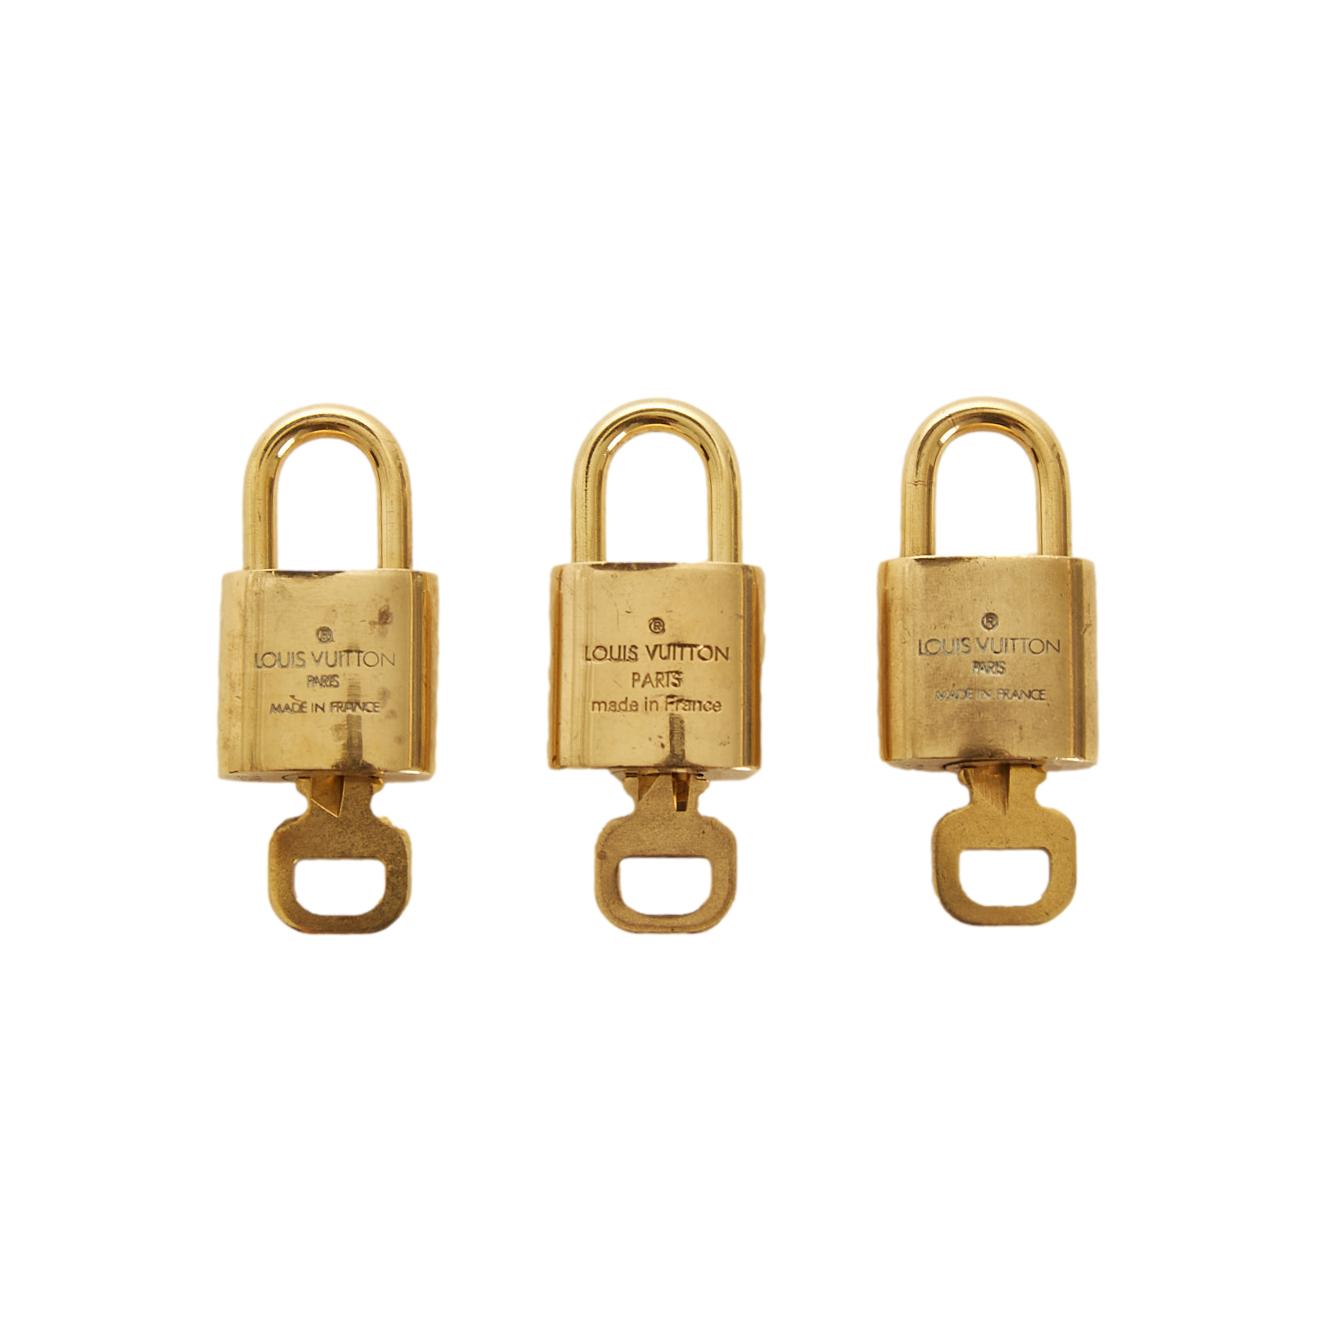 louis-vuitton lock and key set